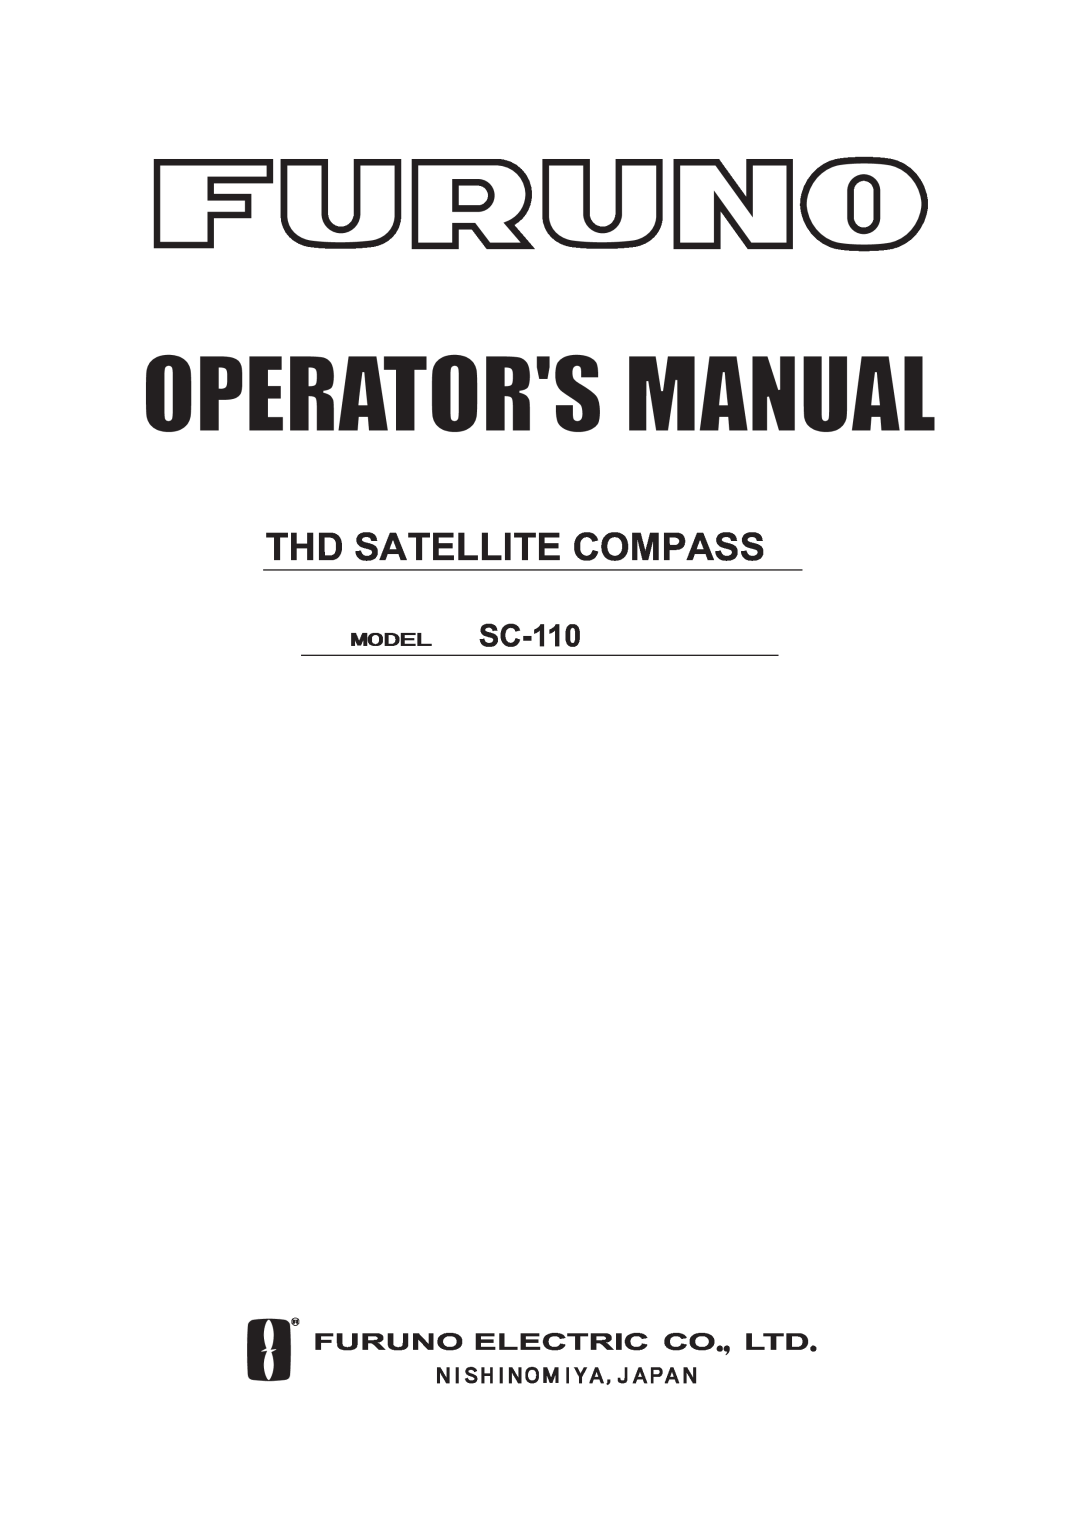 Furuno SC-110 manual Thd Satellite Compass 